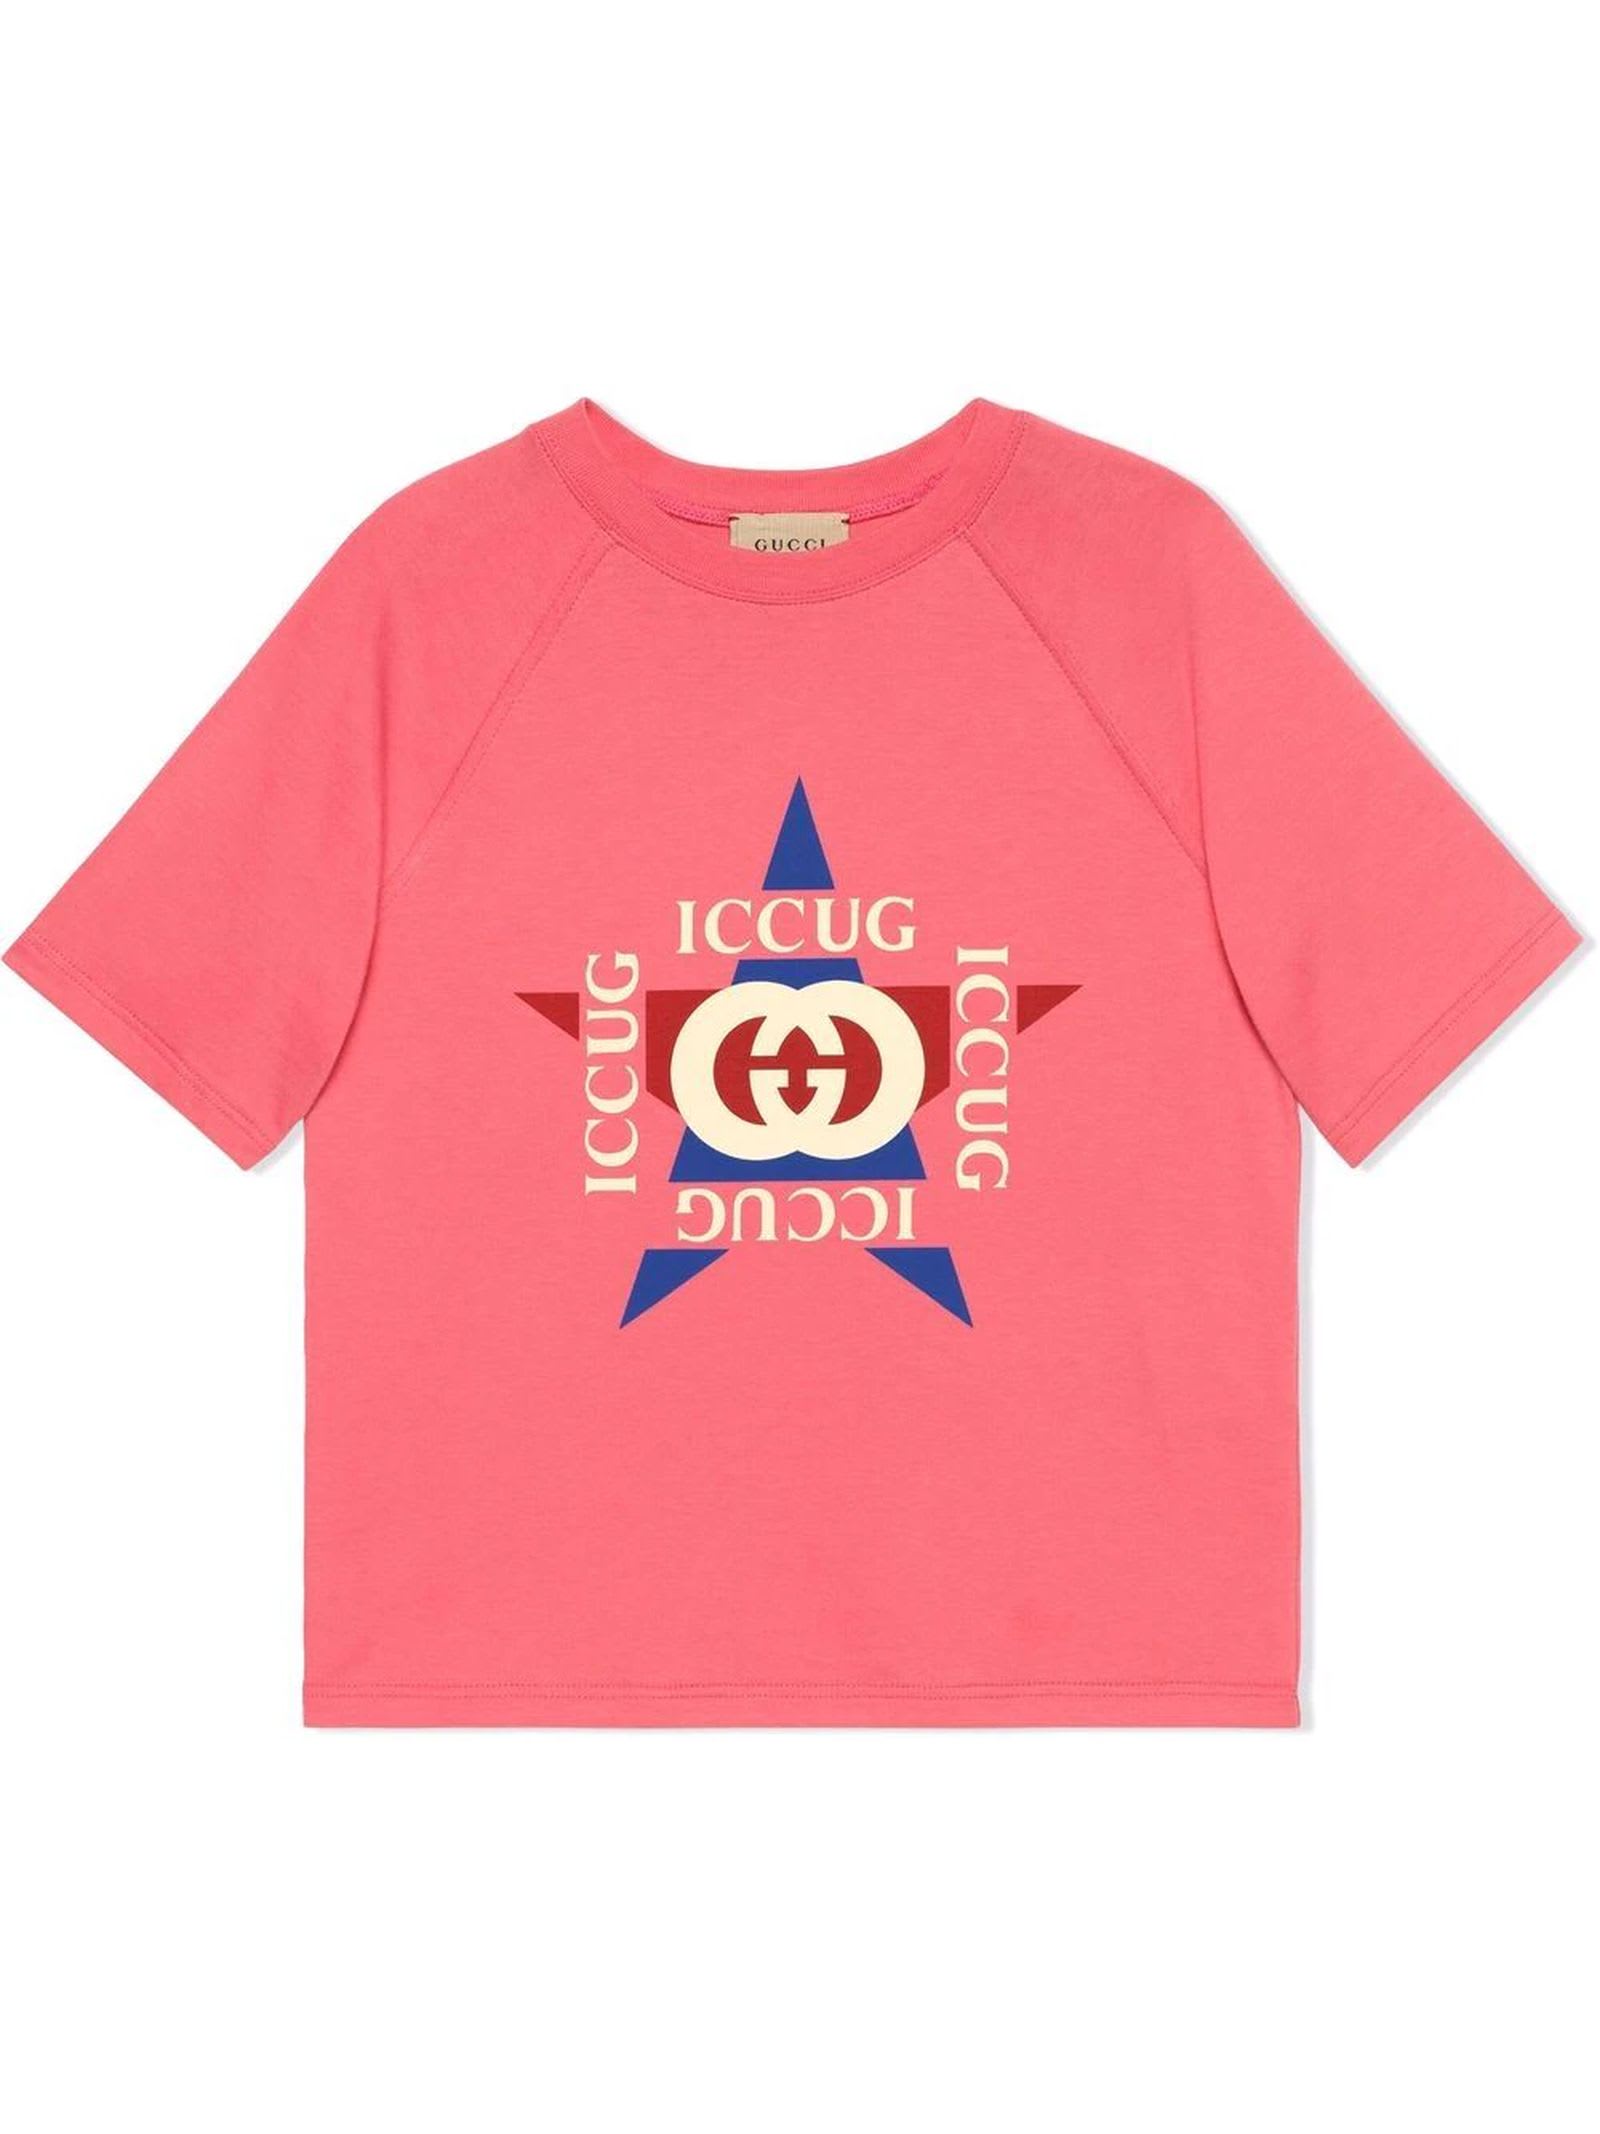 Gucci Pink Cotton Jersey T-shirt